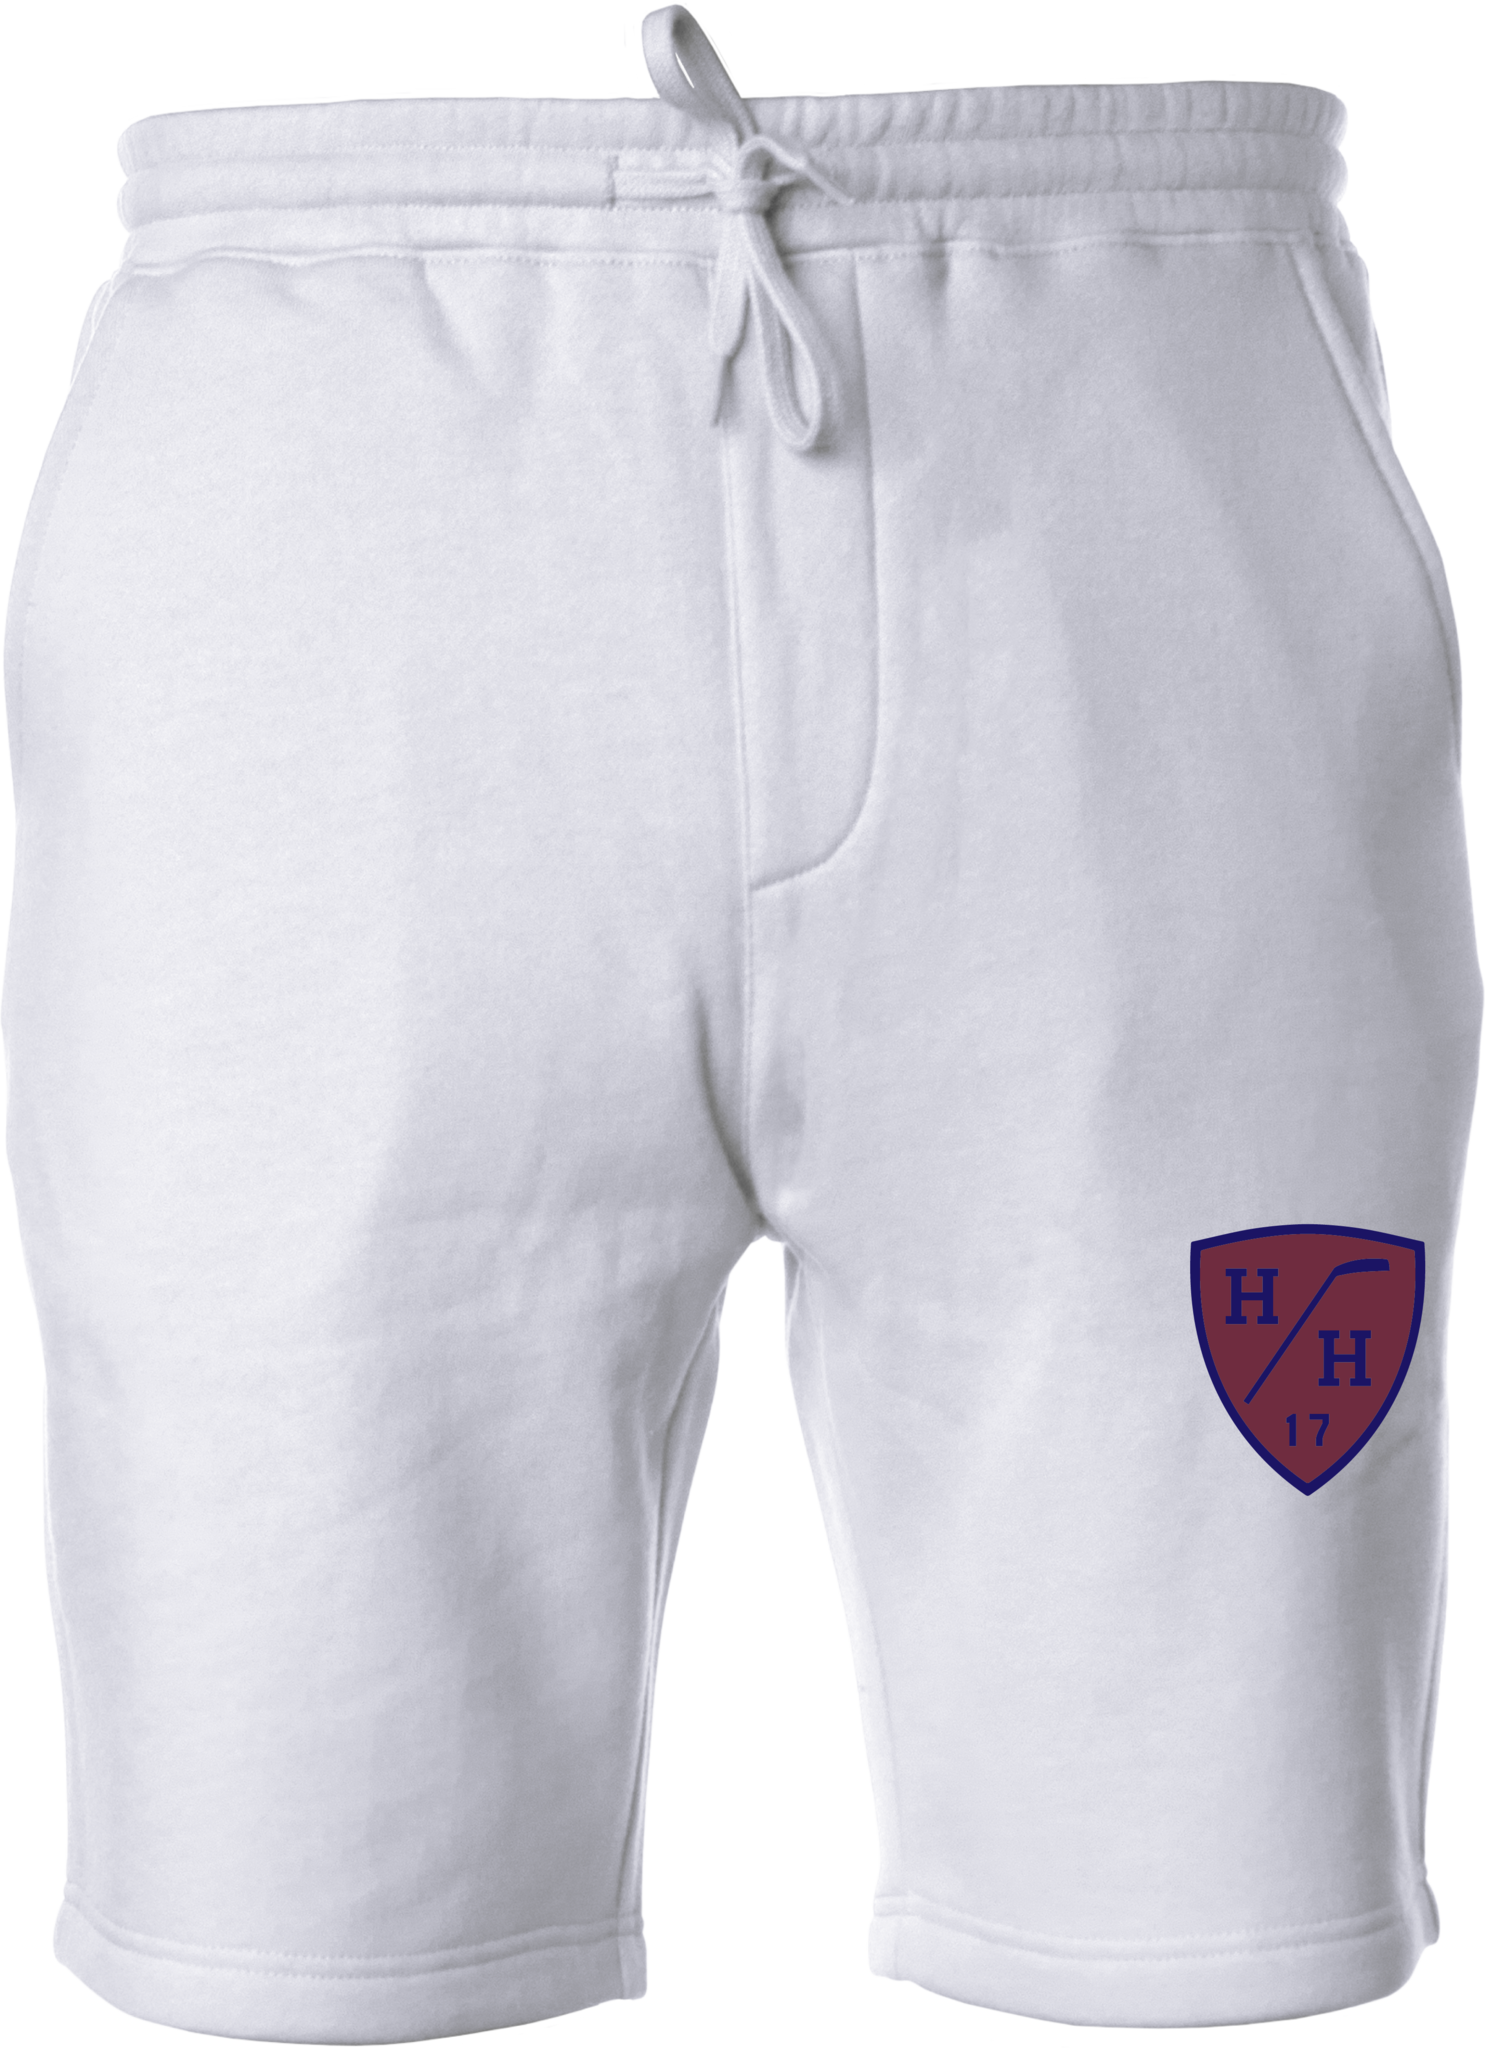 White, navy blue design, burgundy design, sweat short with drawstring, cotton blend taper fit.